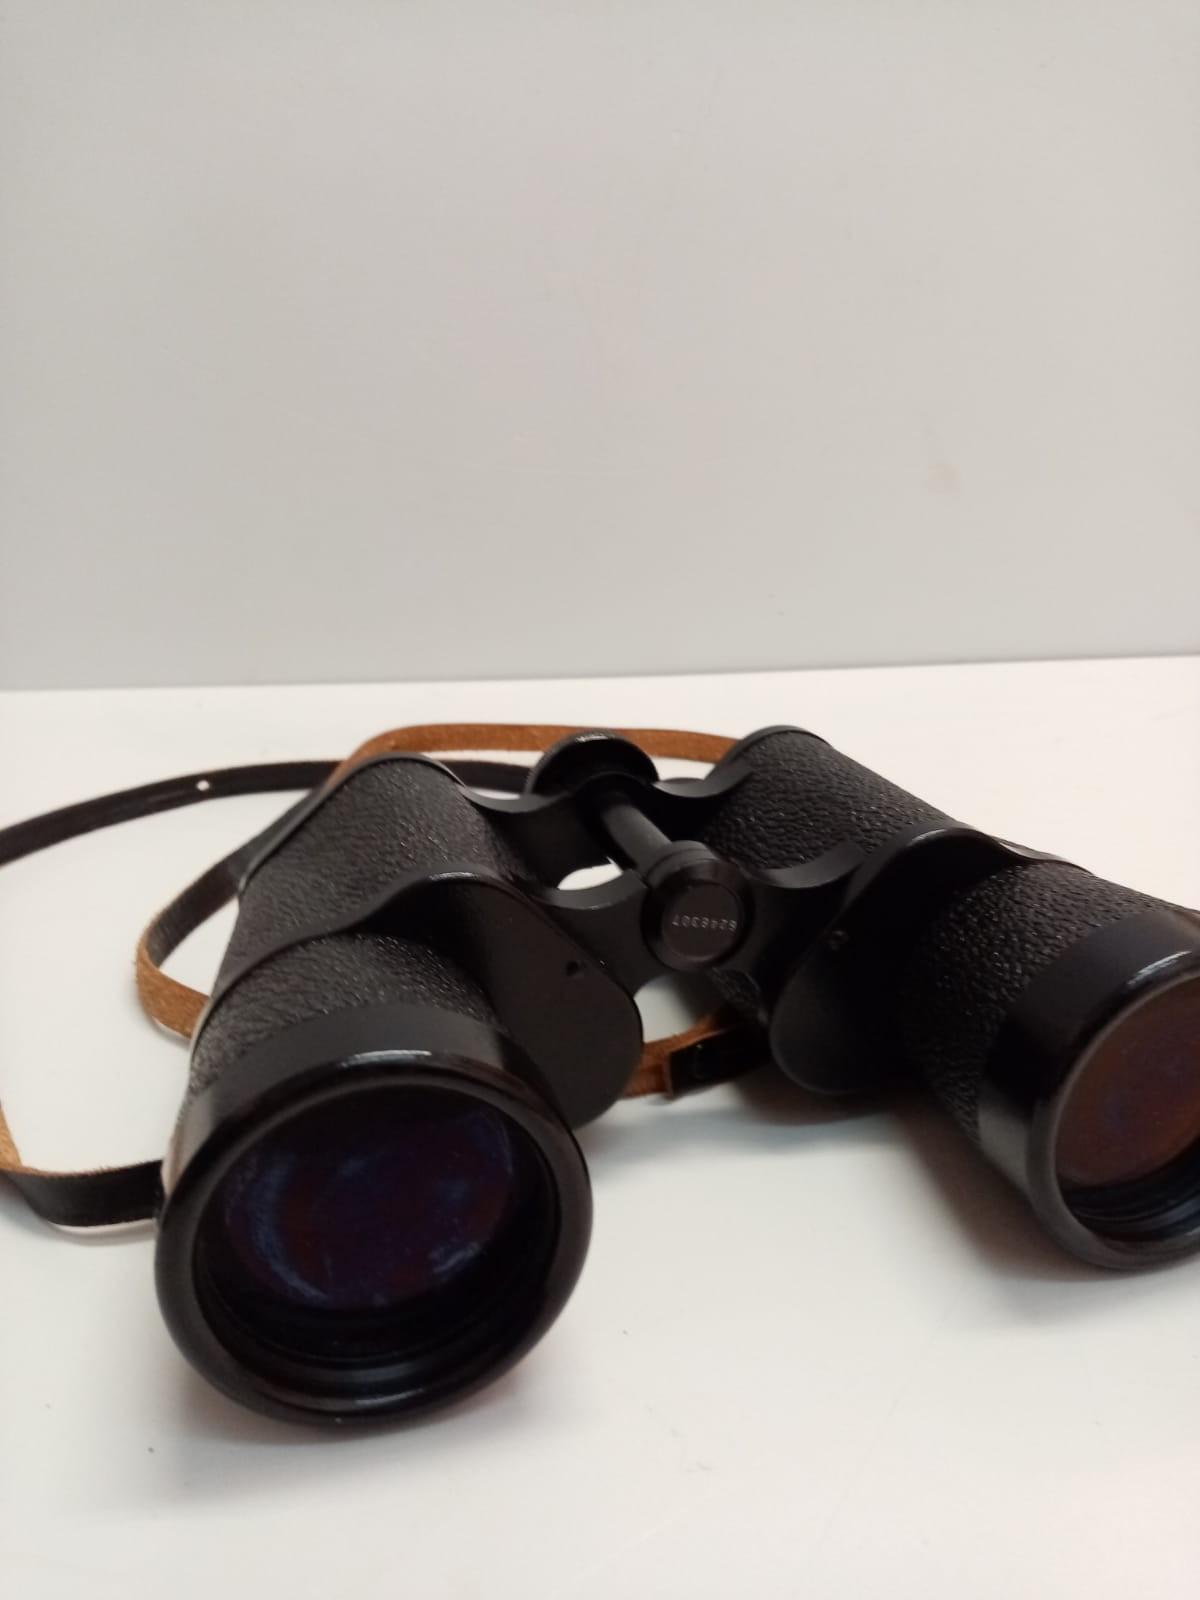 Large Carl Zeiss Jena Binoculars in Leather Carrying Case, 10 x 50w. - Bild 6 aus 8